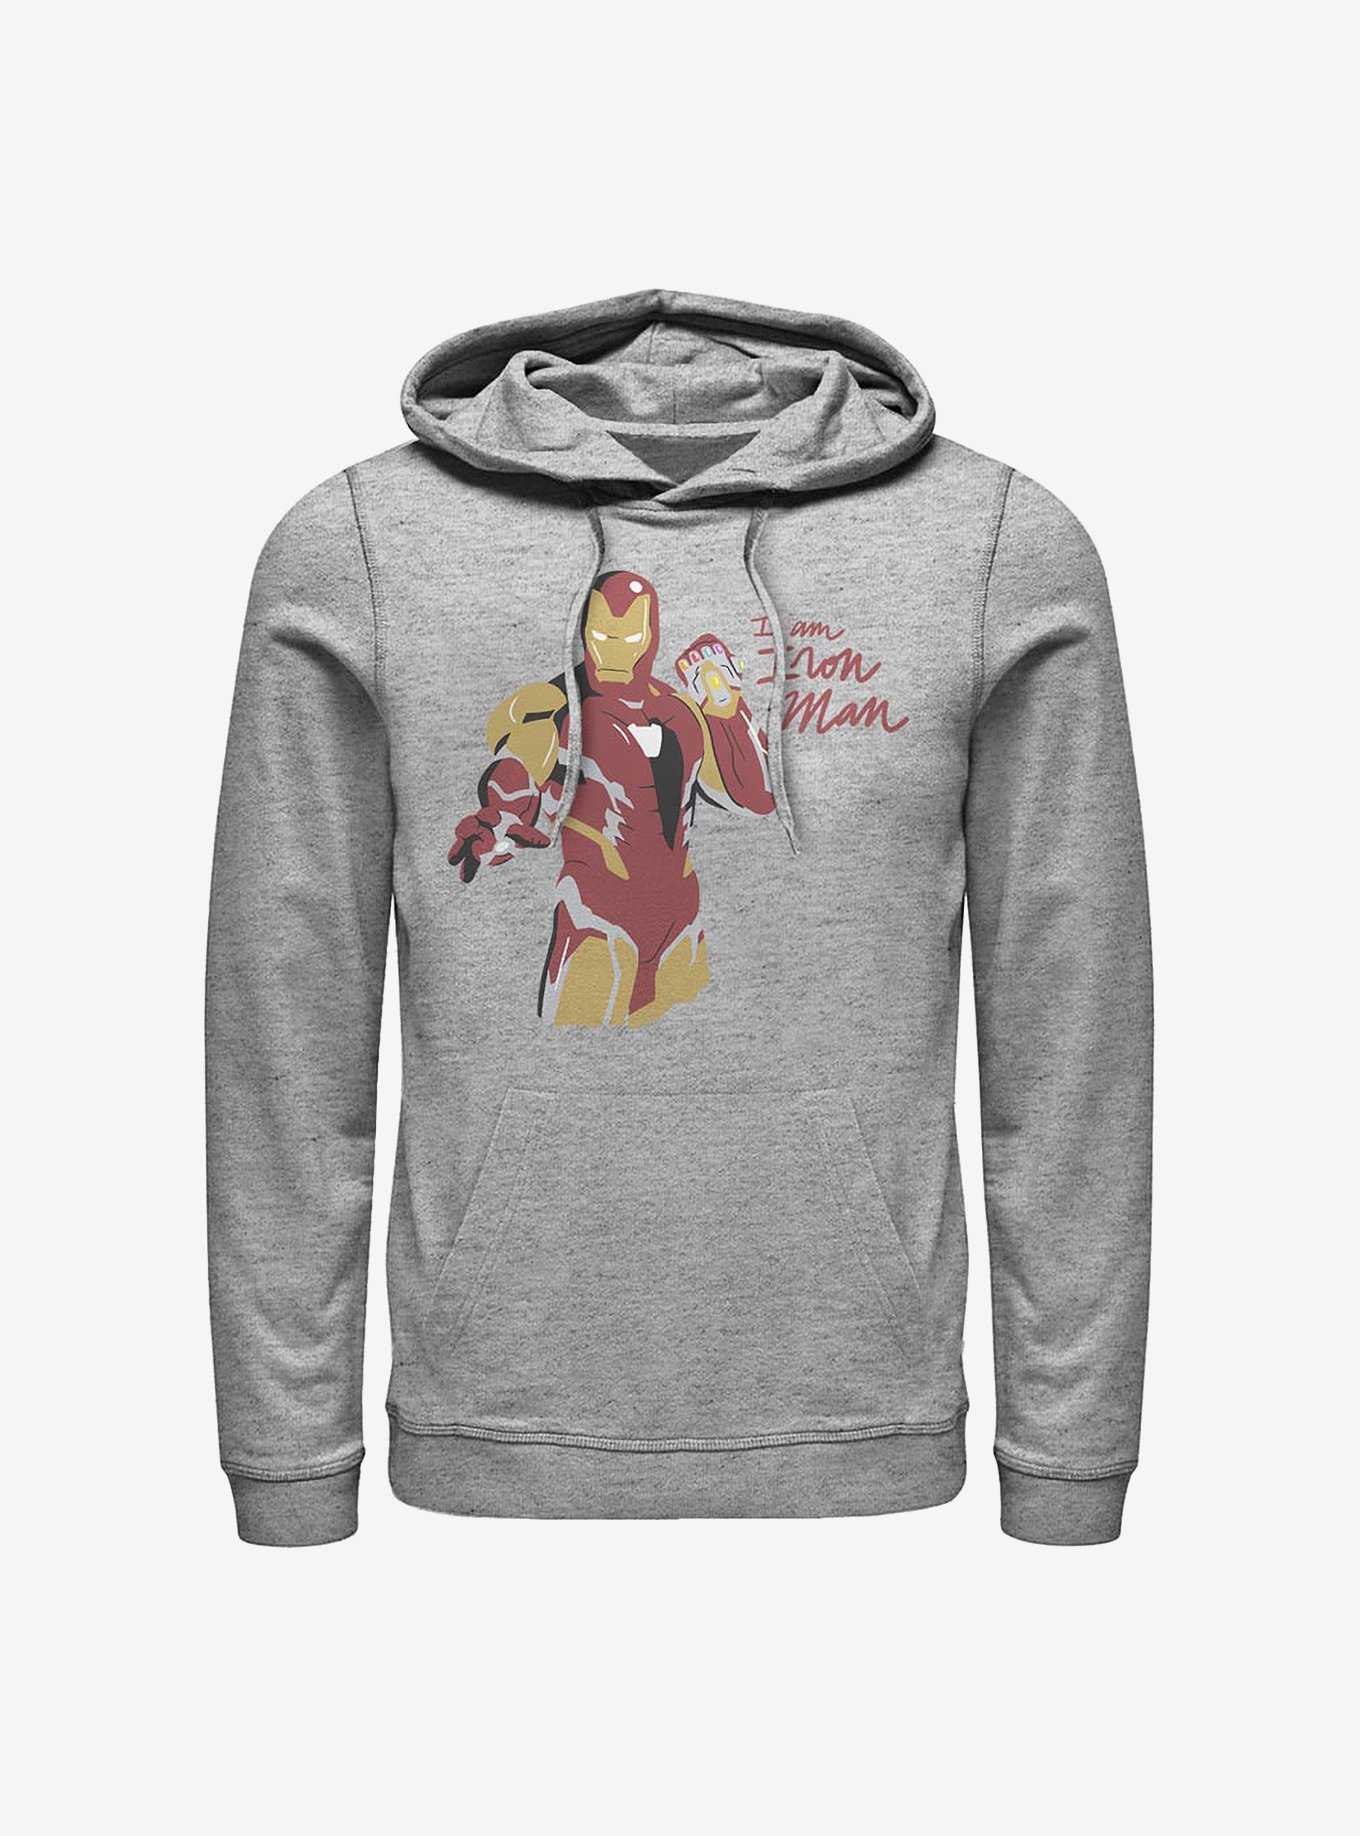 Marvel Iron Man Iron Scribbles Hoodie, , hi-res